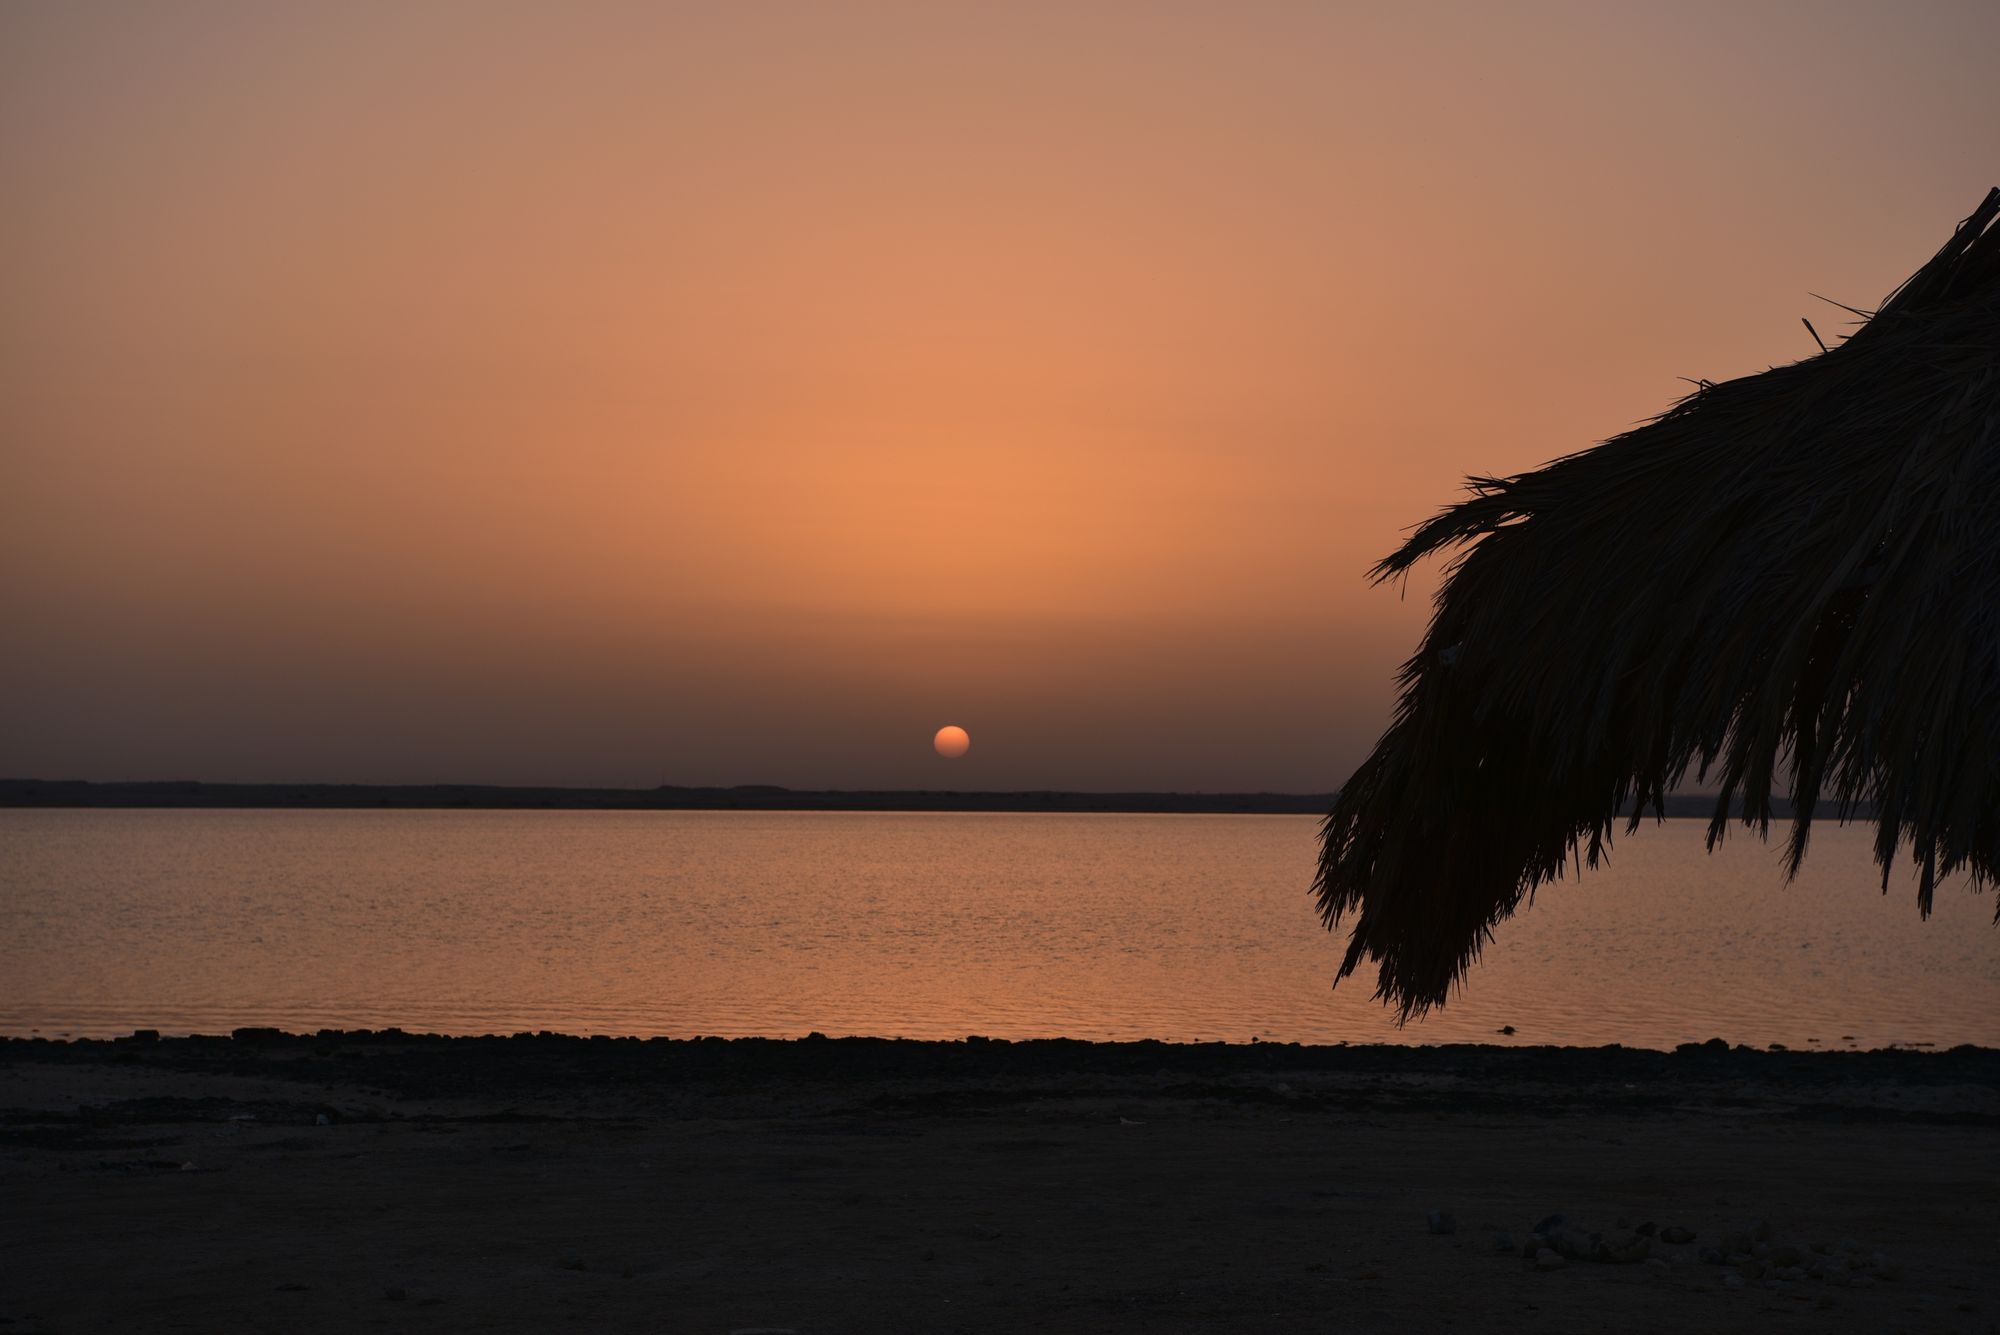 Zekreet Beach in Qatar